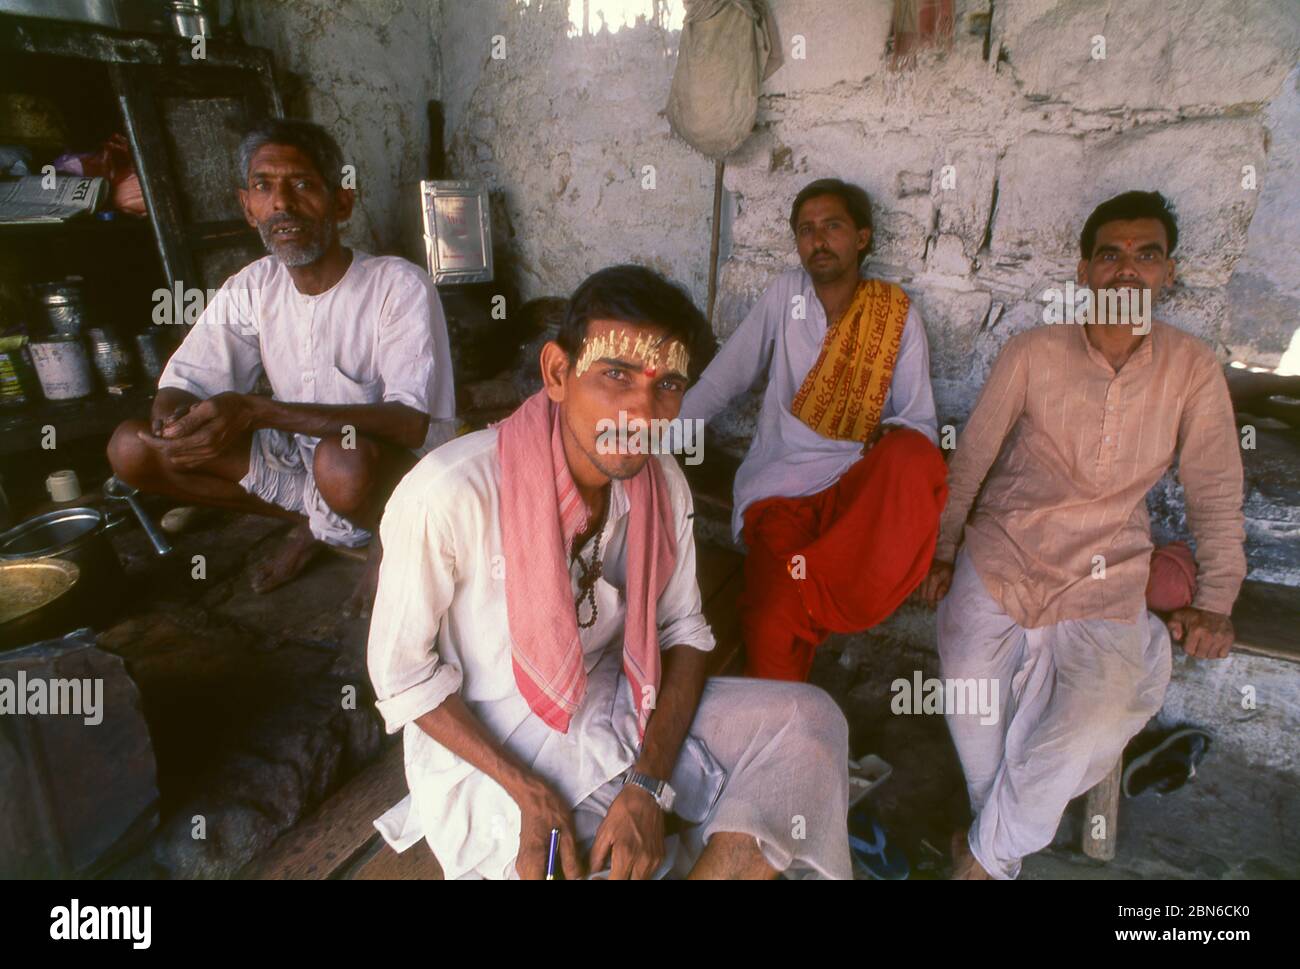 Indien: Ein Teehaus in der Nähe des Hindu Omkareshwar Mahadev Tempels am Narmada Fluss, Madhya Pradesh. Omkareshwar Mahadev ist ein Hindu-Tempel gewidmet Stockfoto